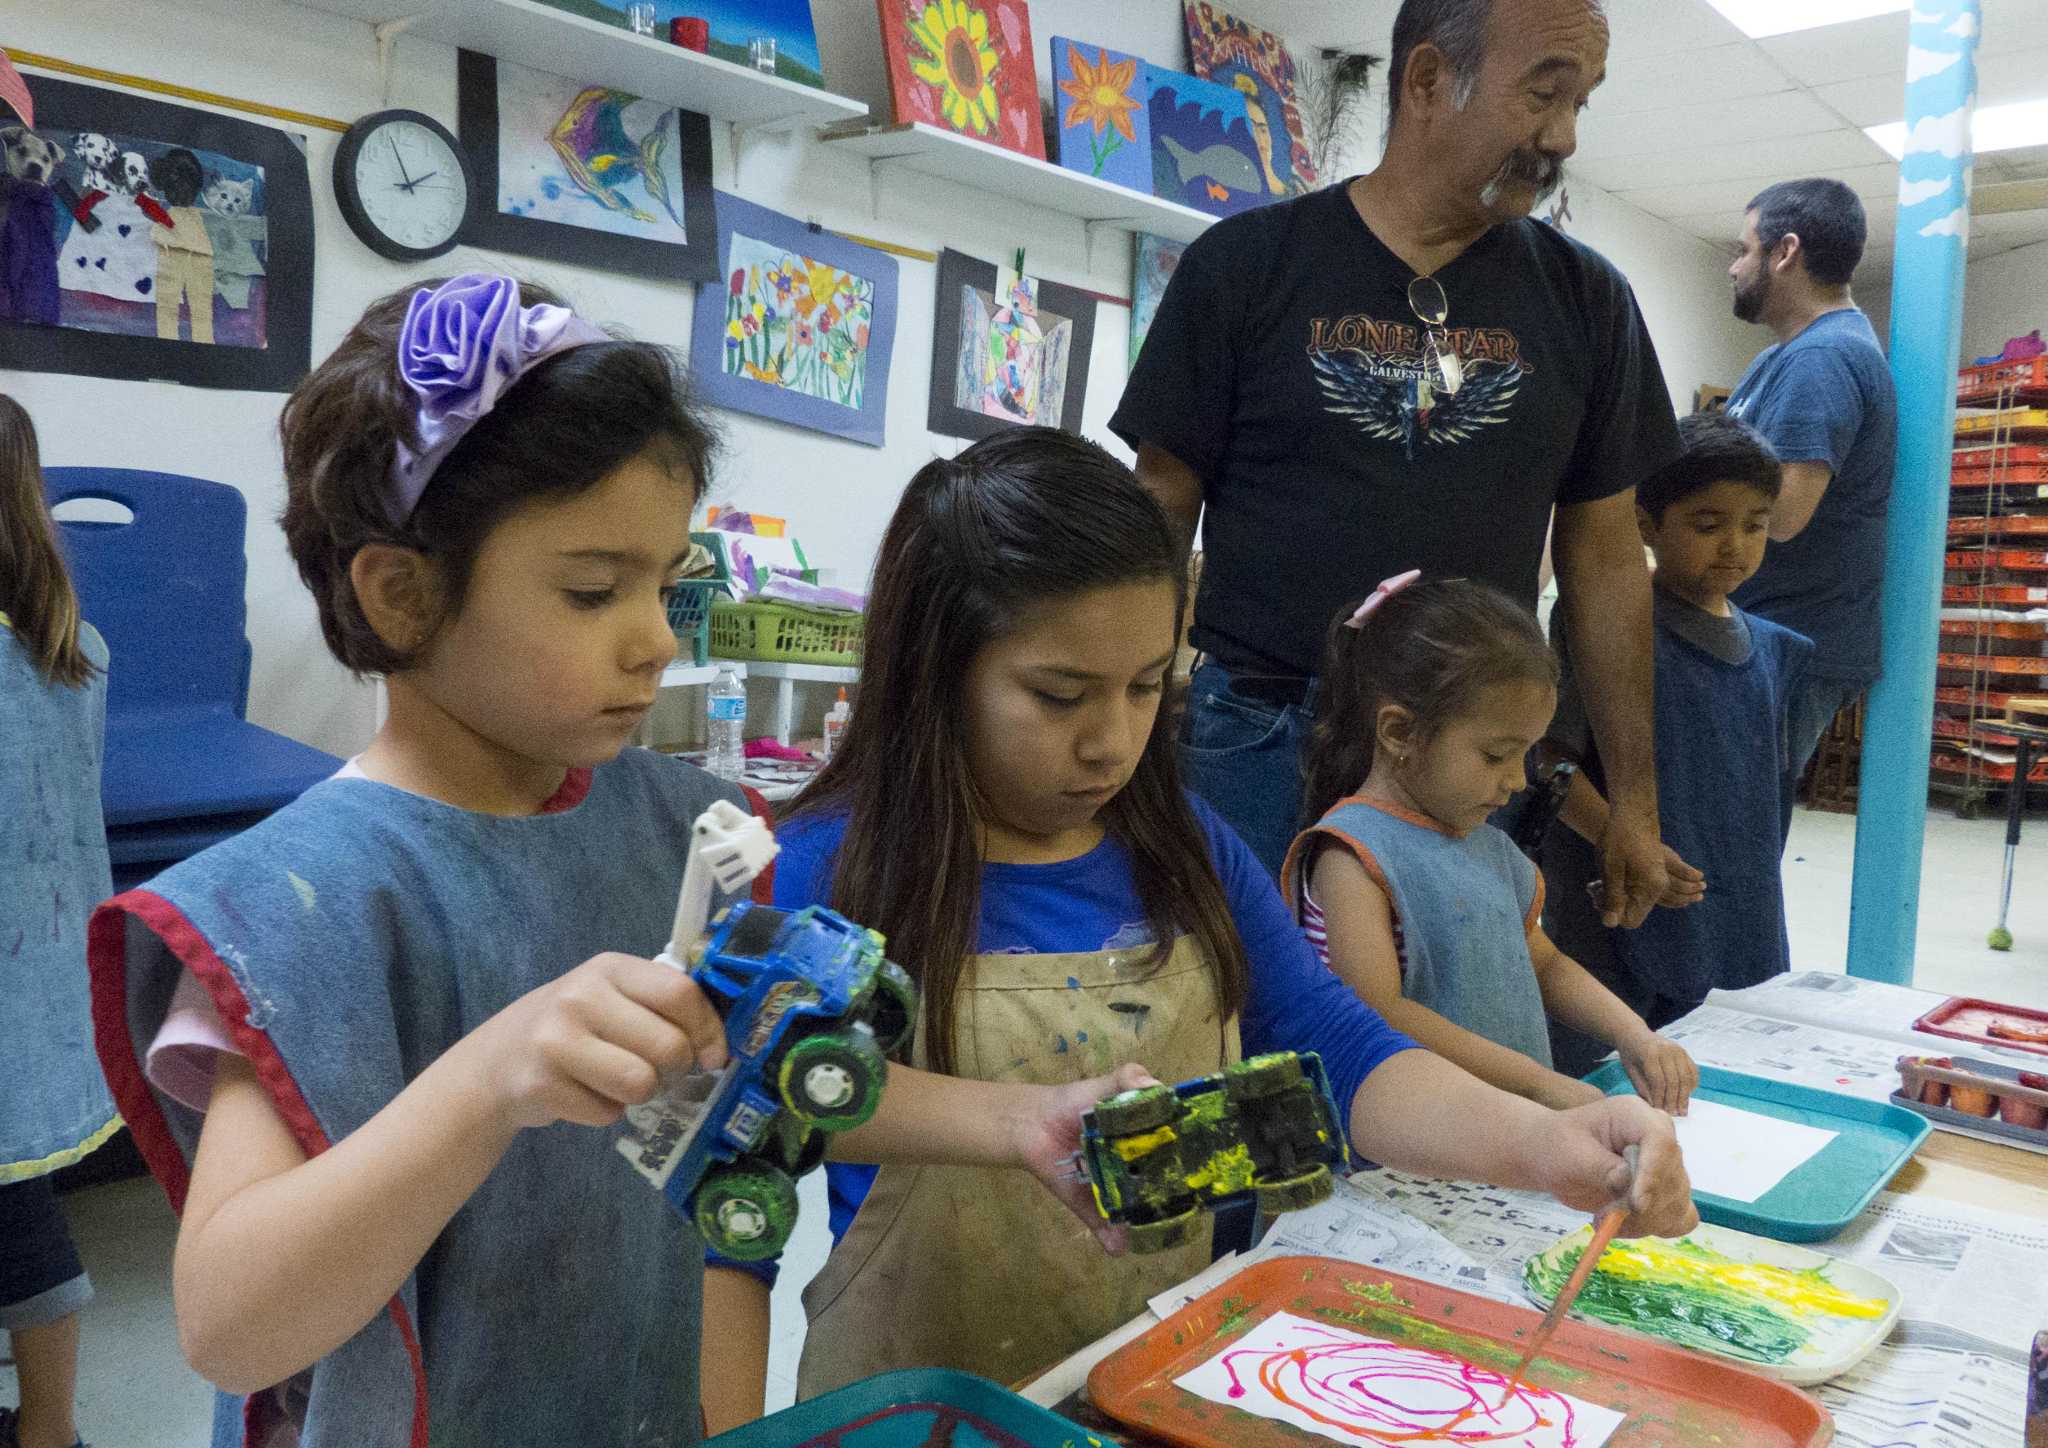 San Antonio summer camps abound for kids